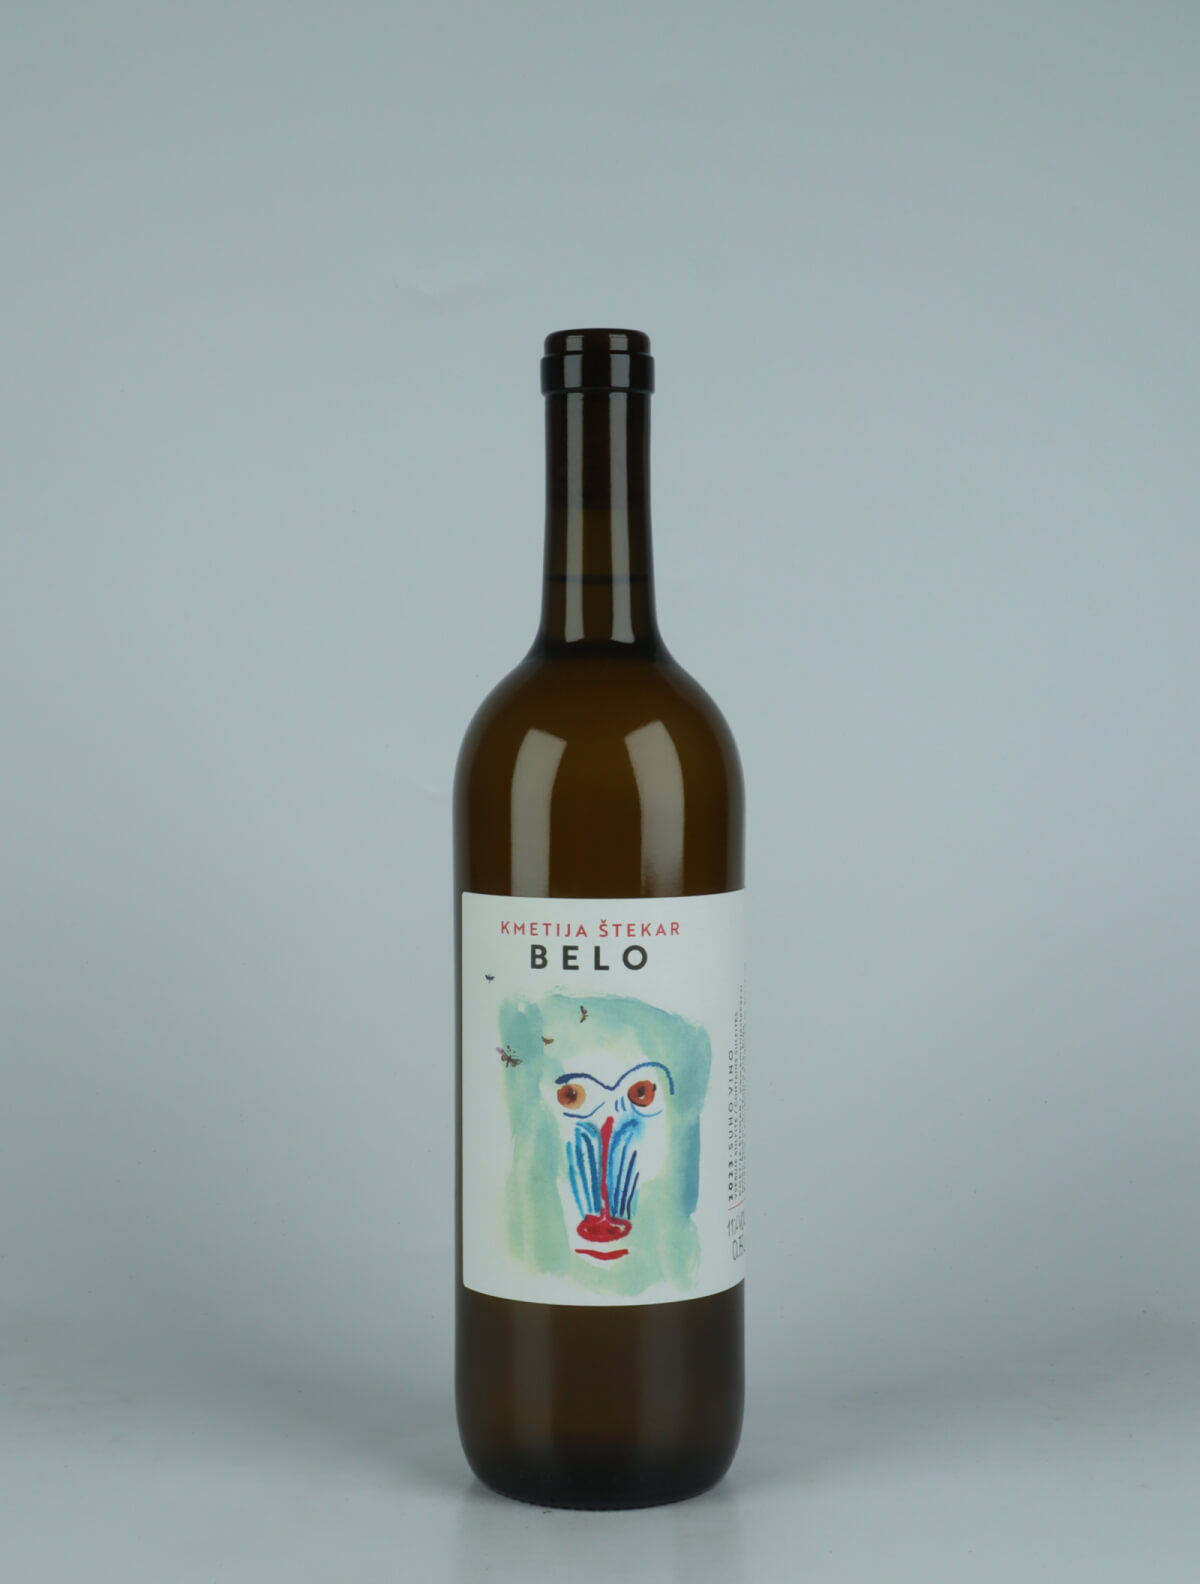 En flaske 2023 Belo Hvidvin fra Kmetija Stekar, Brda i Slovenien